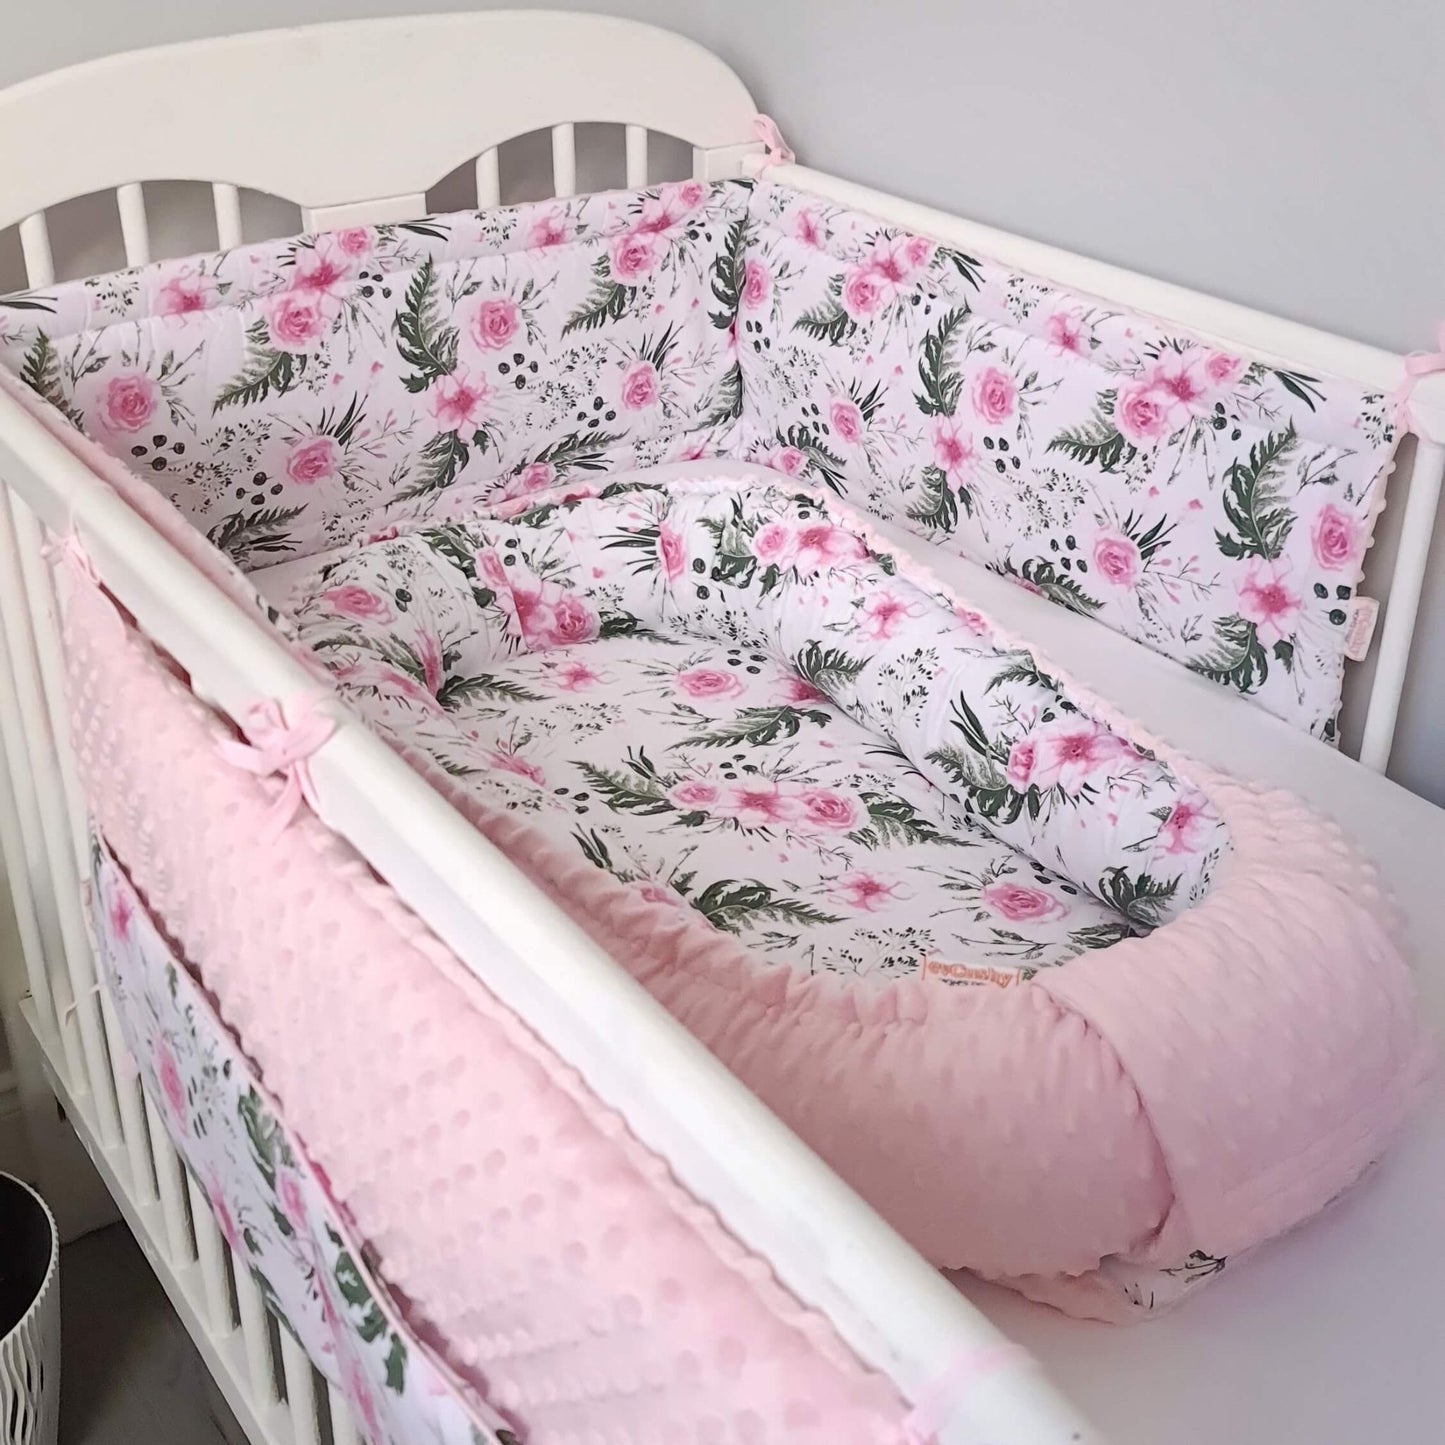 wvcushy baby nest cot bumper cot organizer pink fleece minki fabric roses pattern